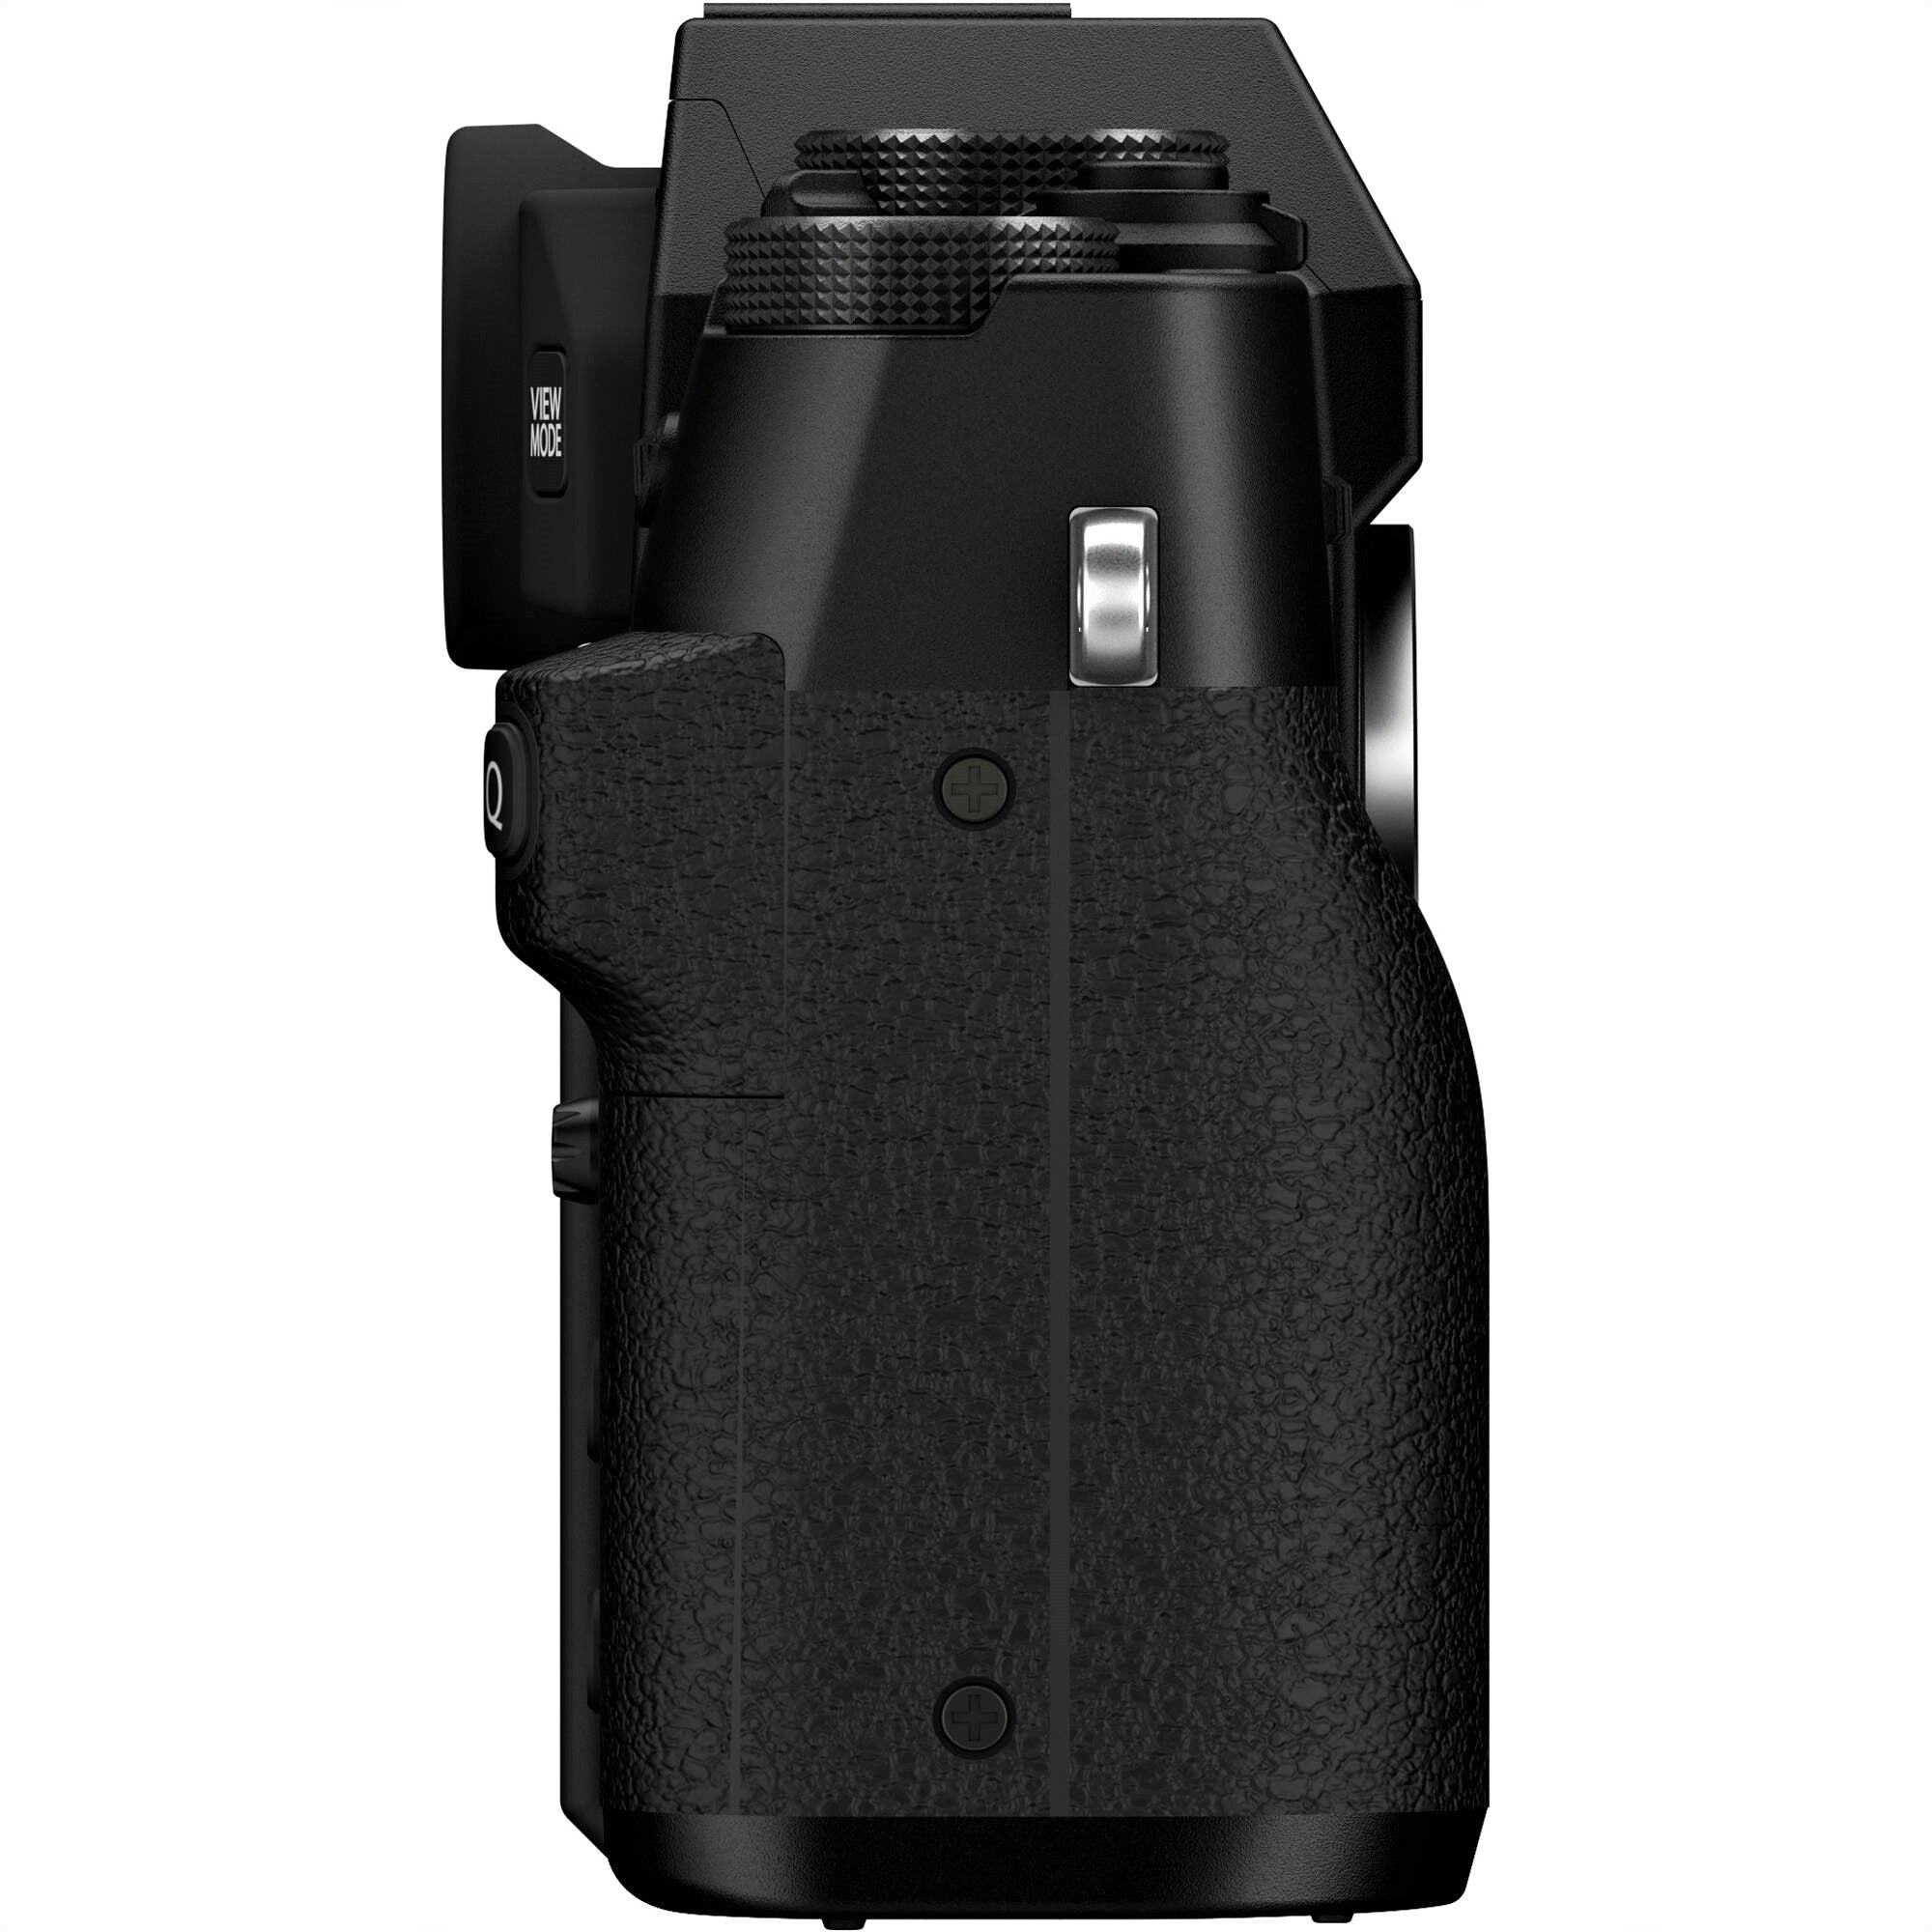 Fujifilm X-T30 II Mirrorless Camera with 18-55mm Lens (Black) - Side View